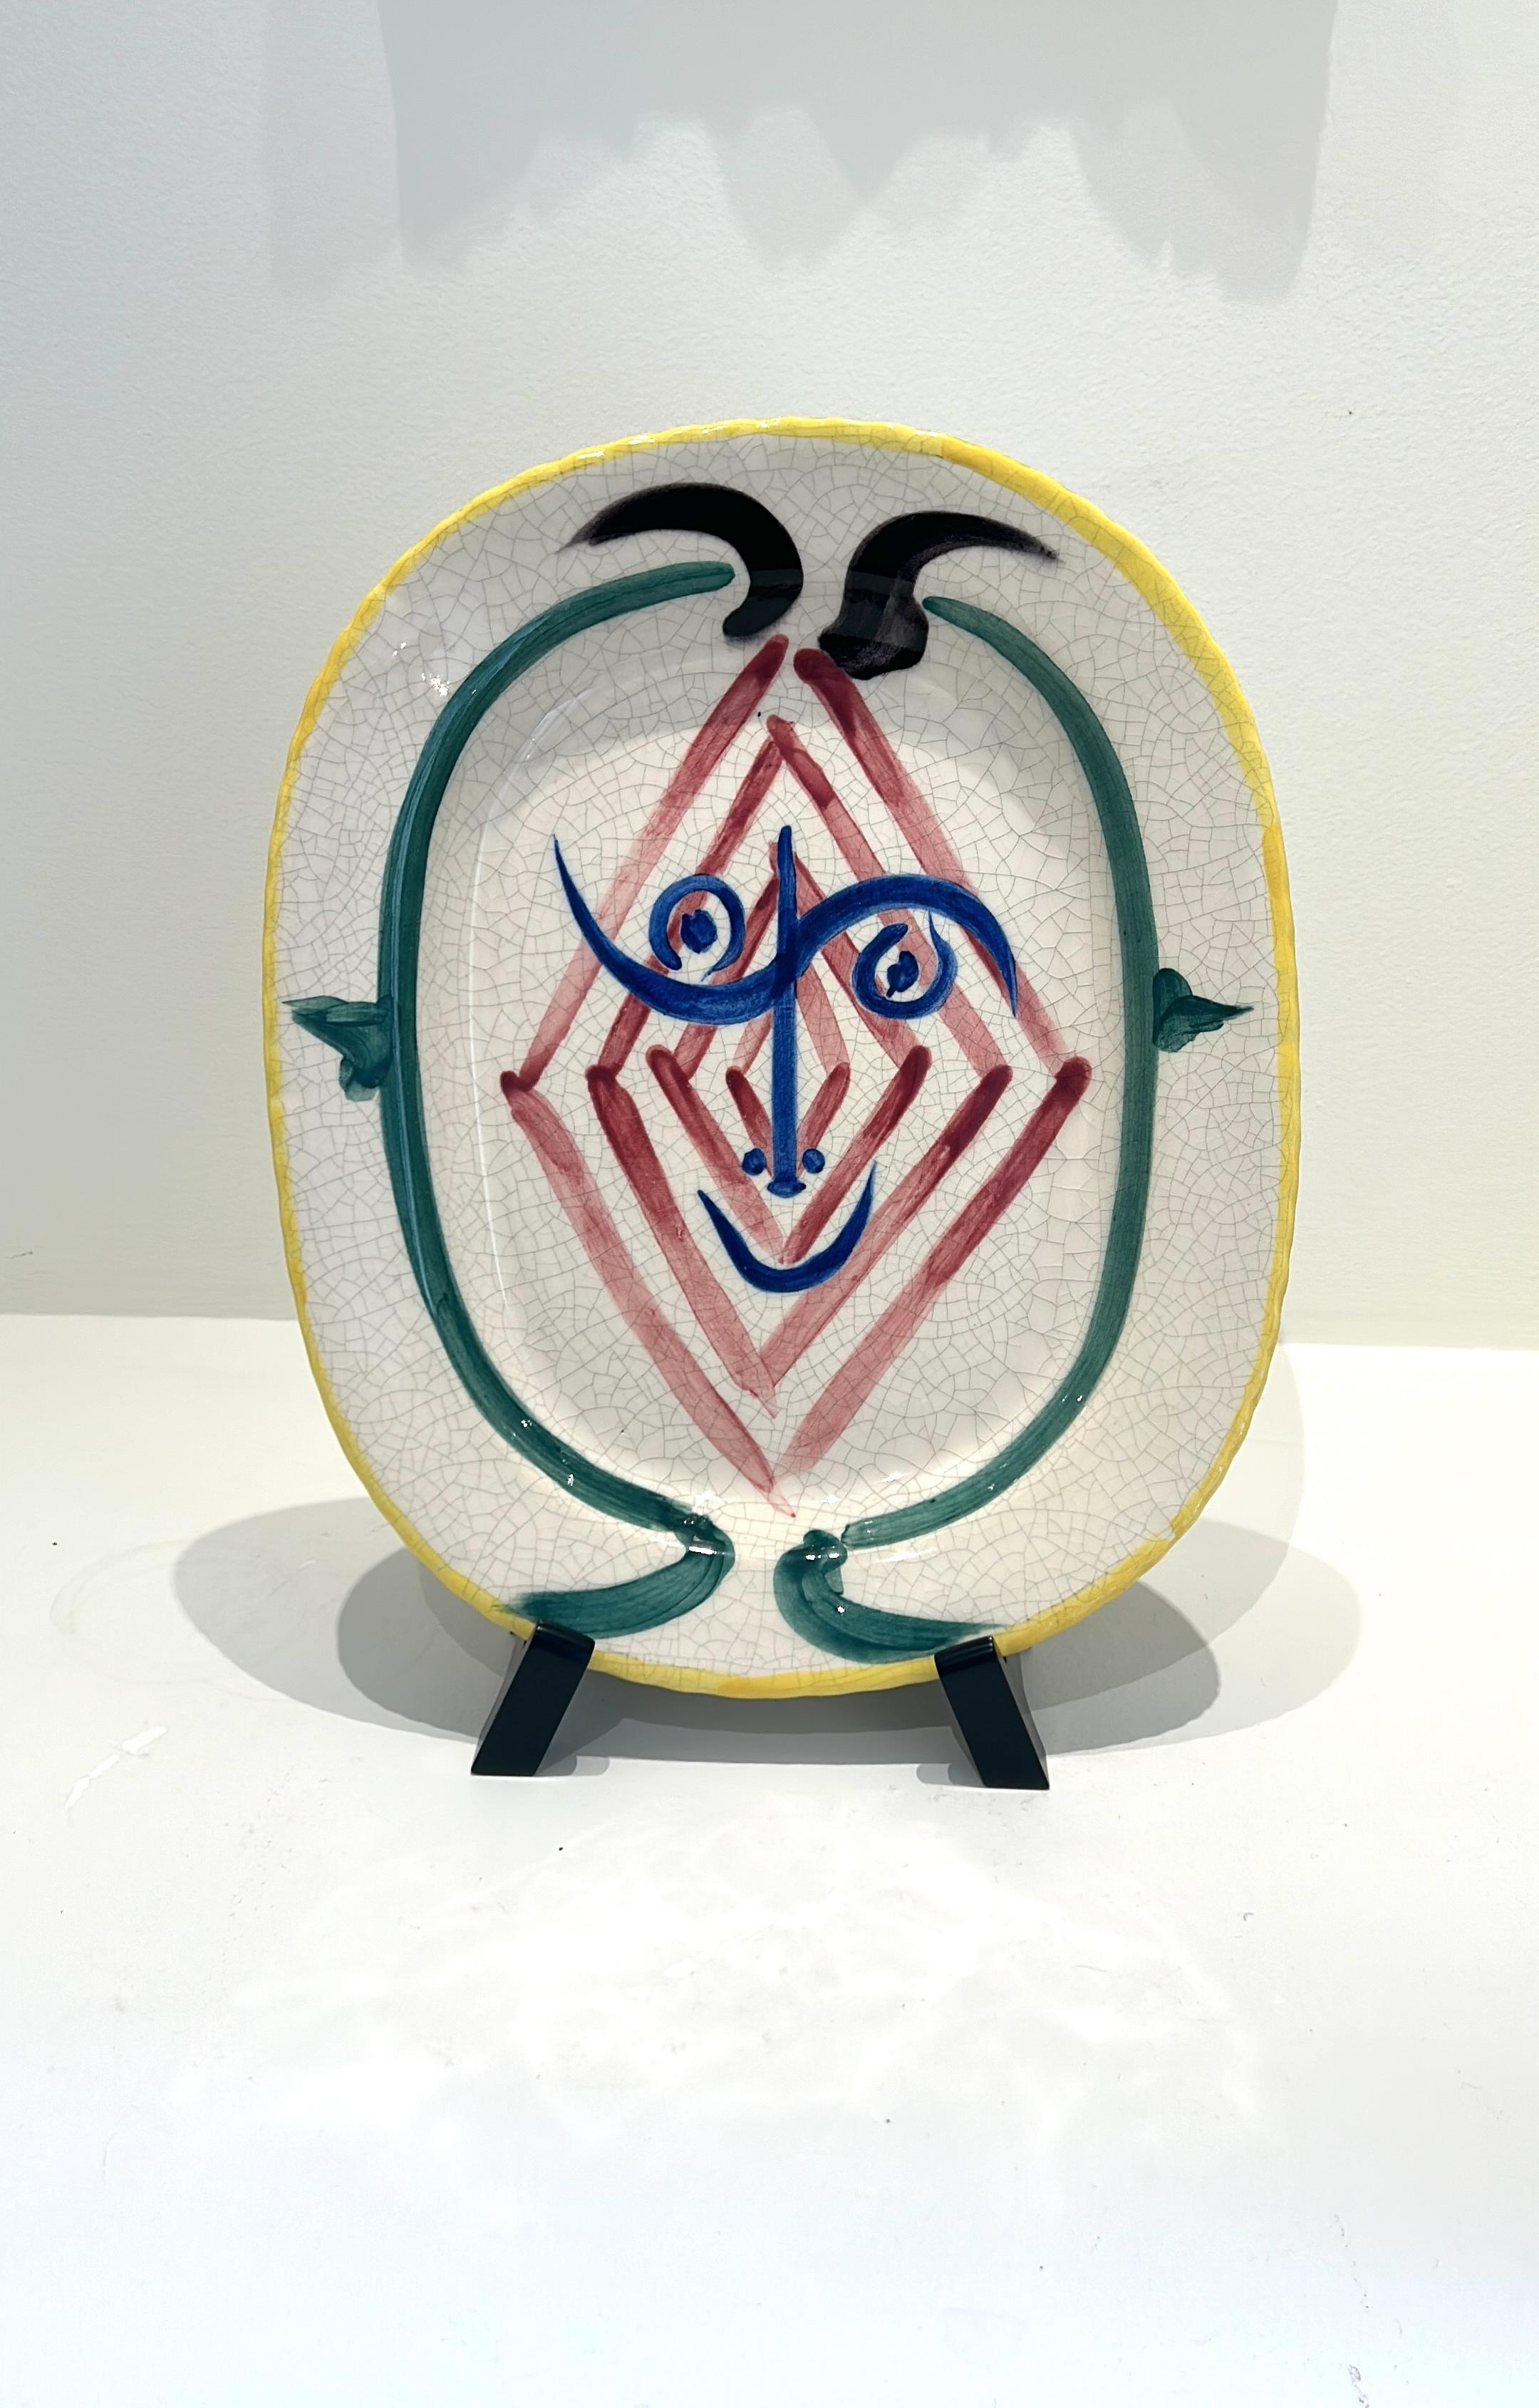 Tête de faune, Picasso, 1940er Jahre, Multiples, Gesicht, Keramik, Design/One, Teller